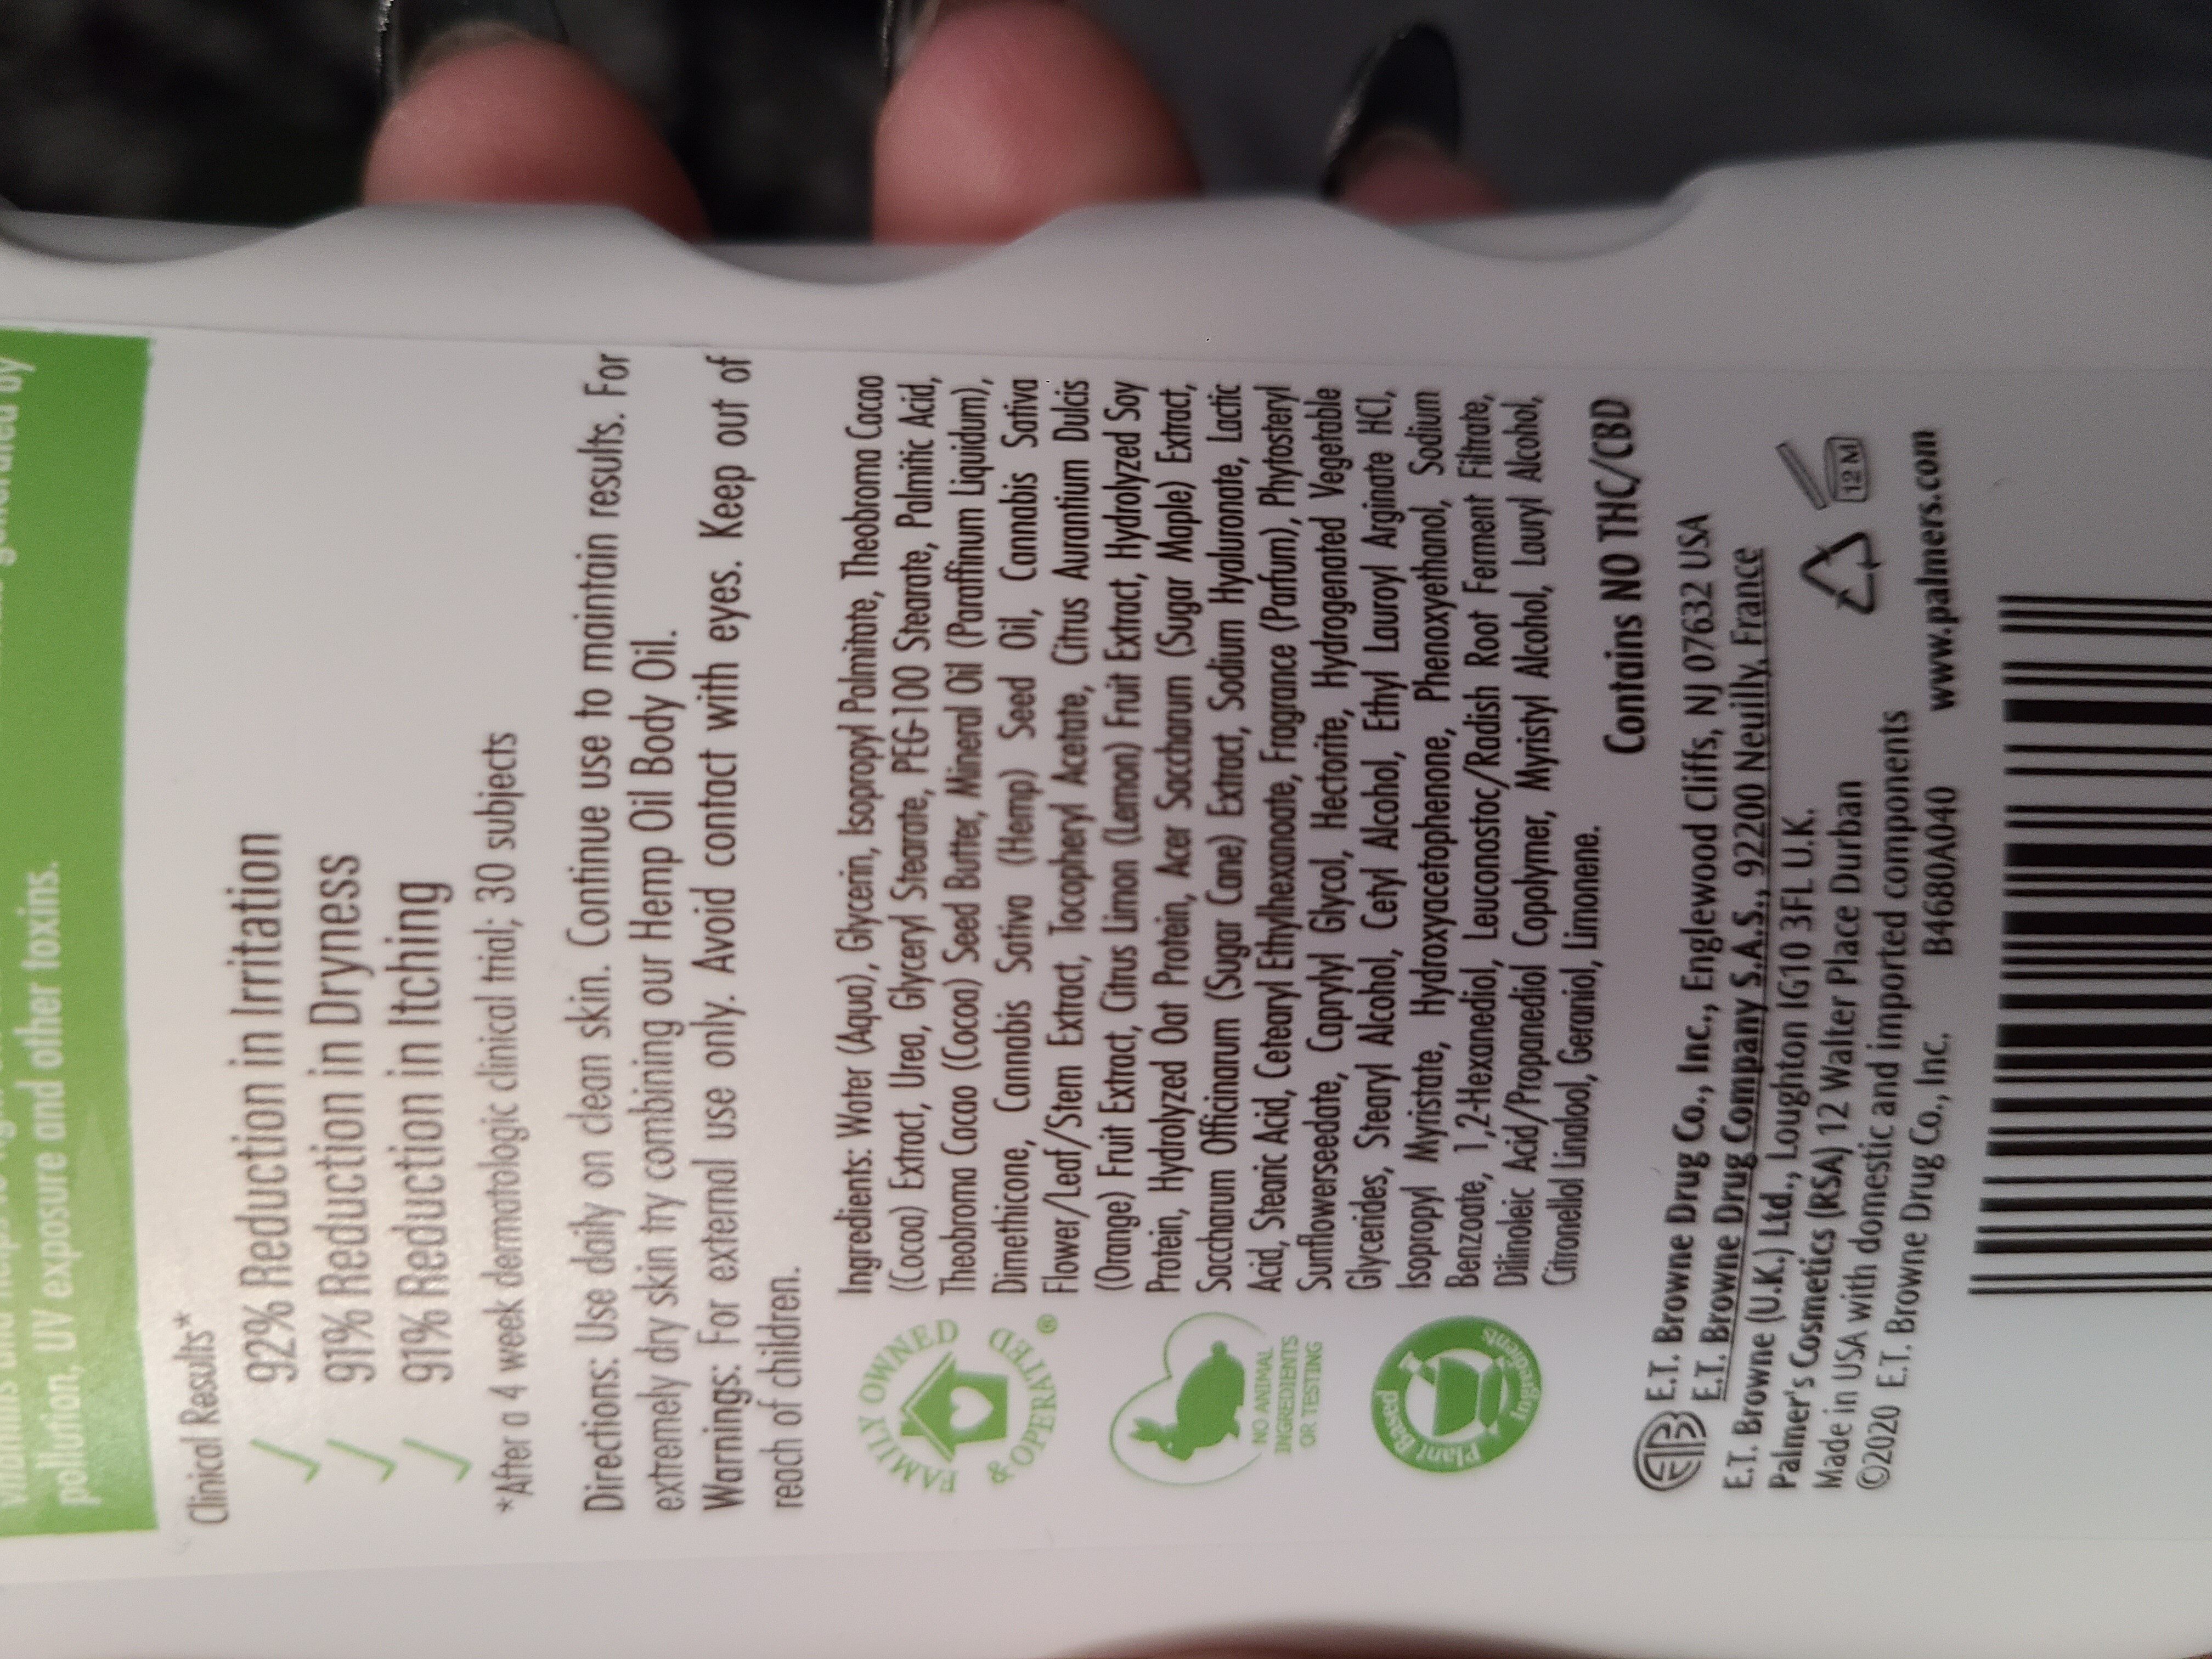 palmers hemp oil relief body lotion - Ингредиенты - en